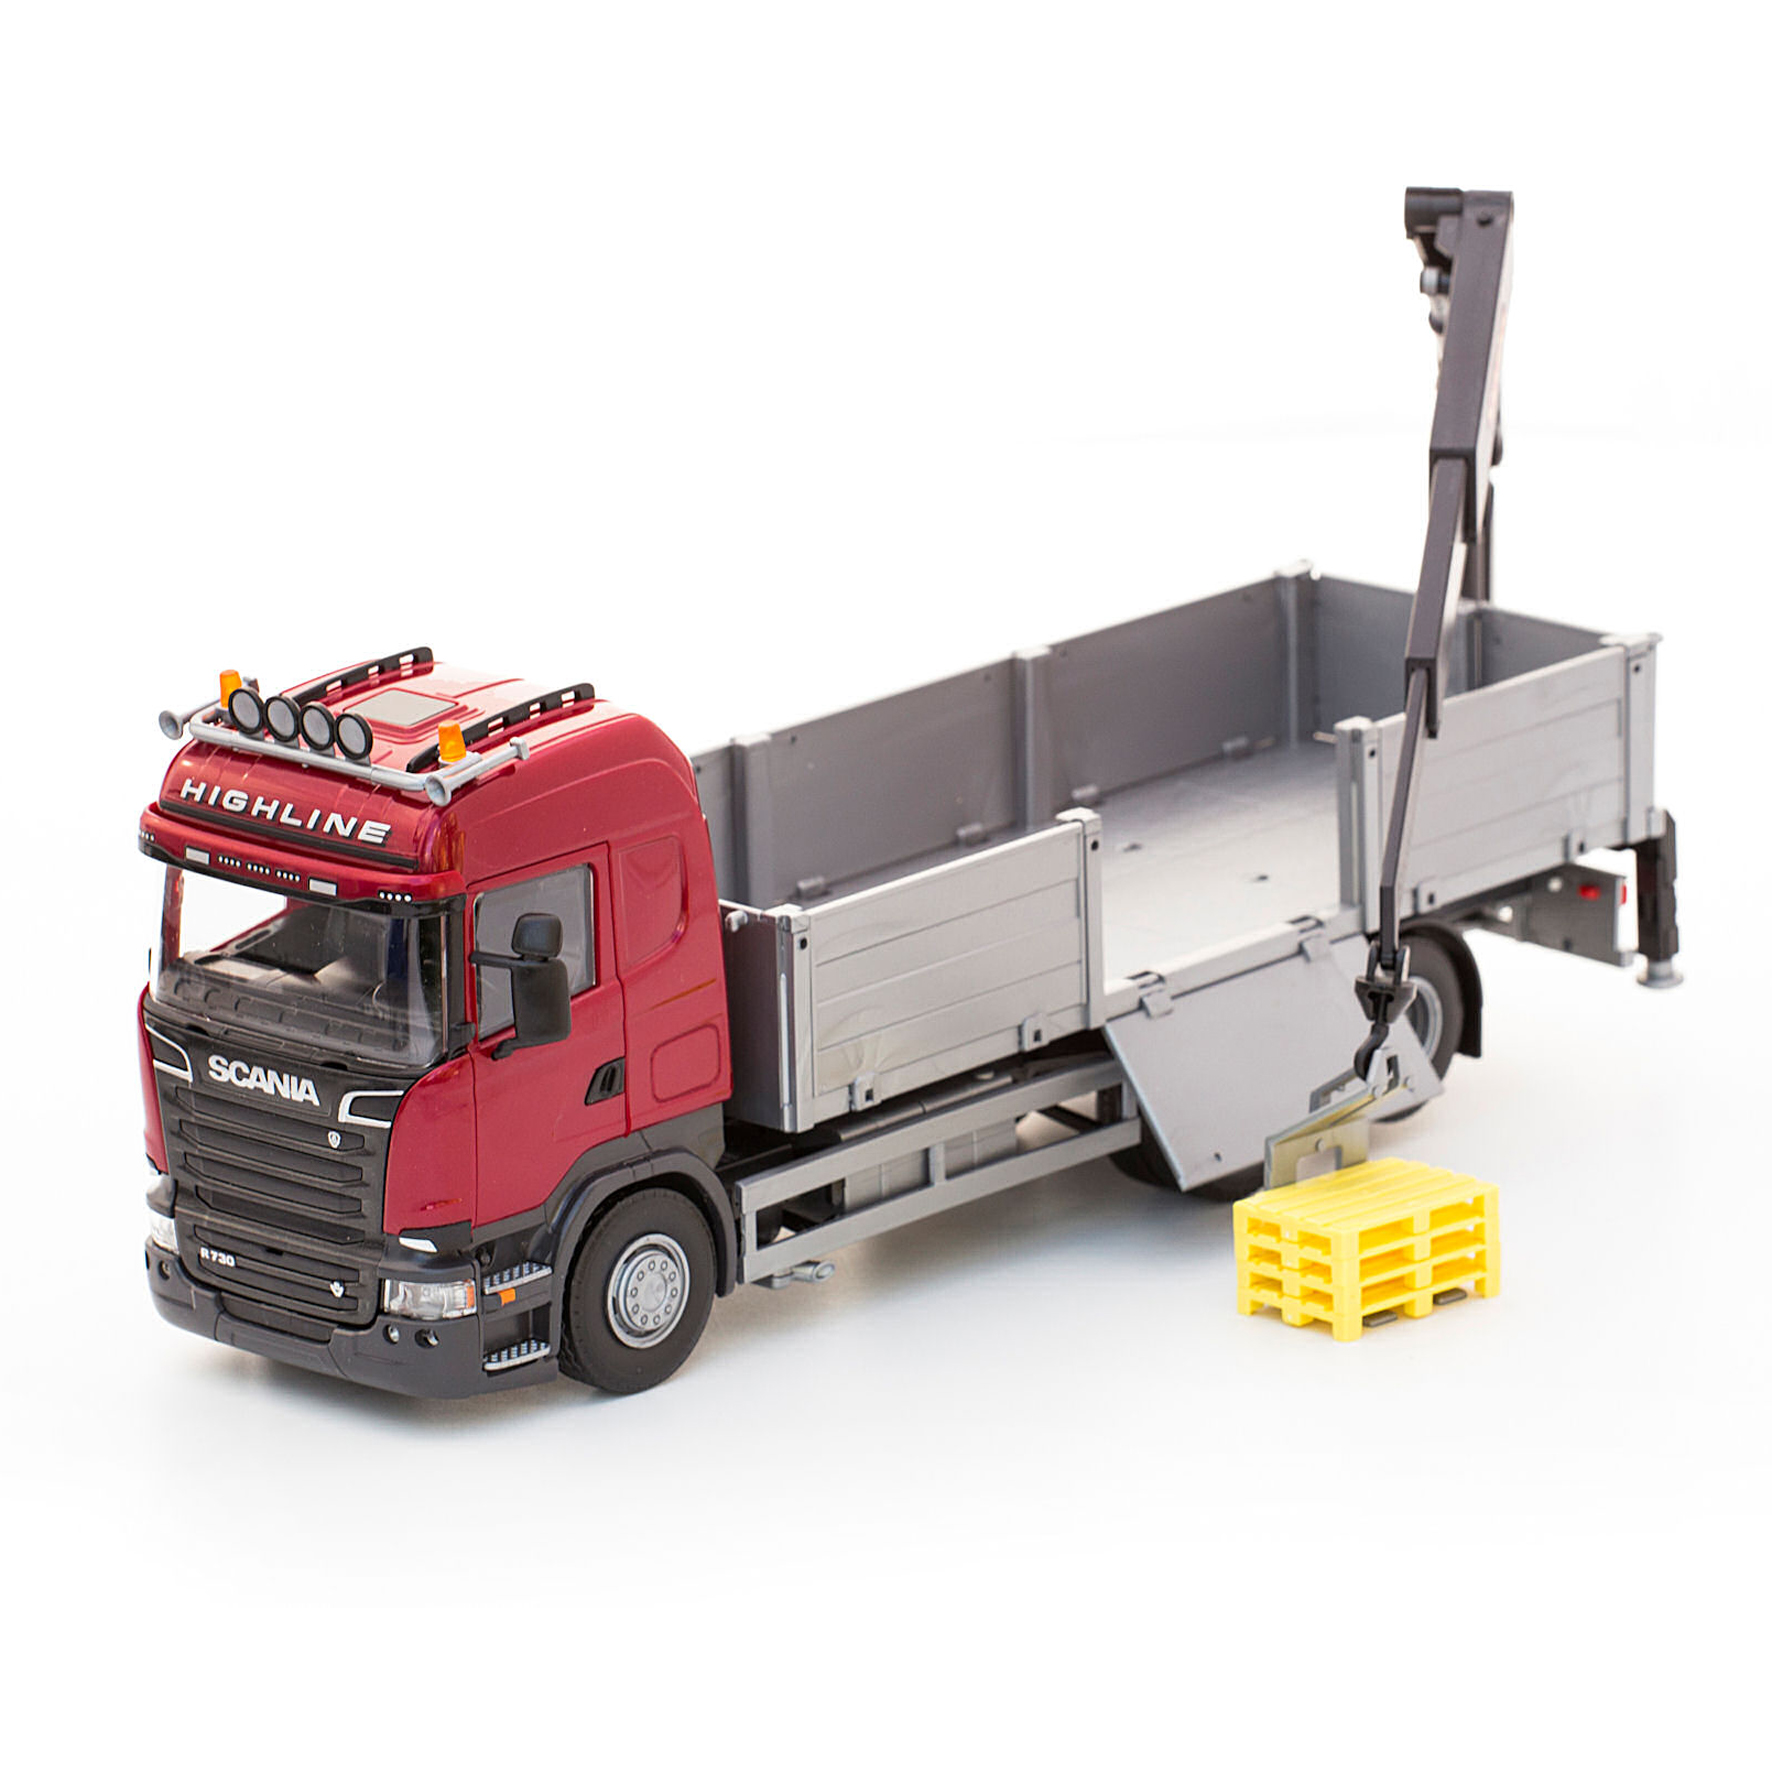 Work Vehicles emek toy car truck scania red 1:25